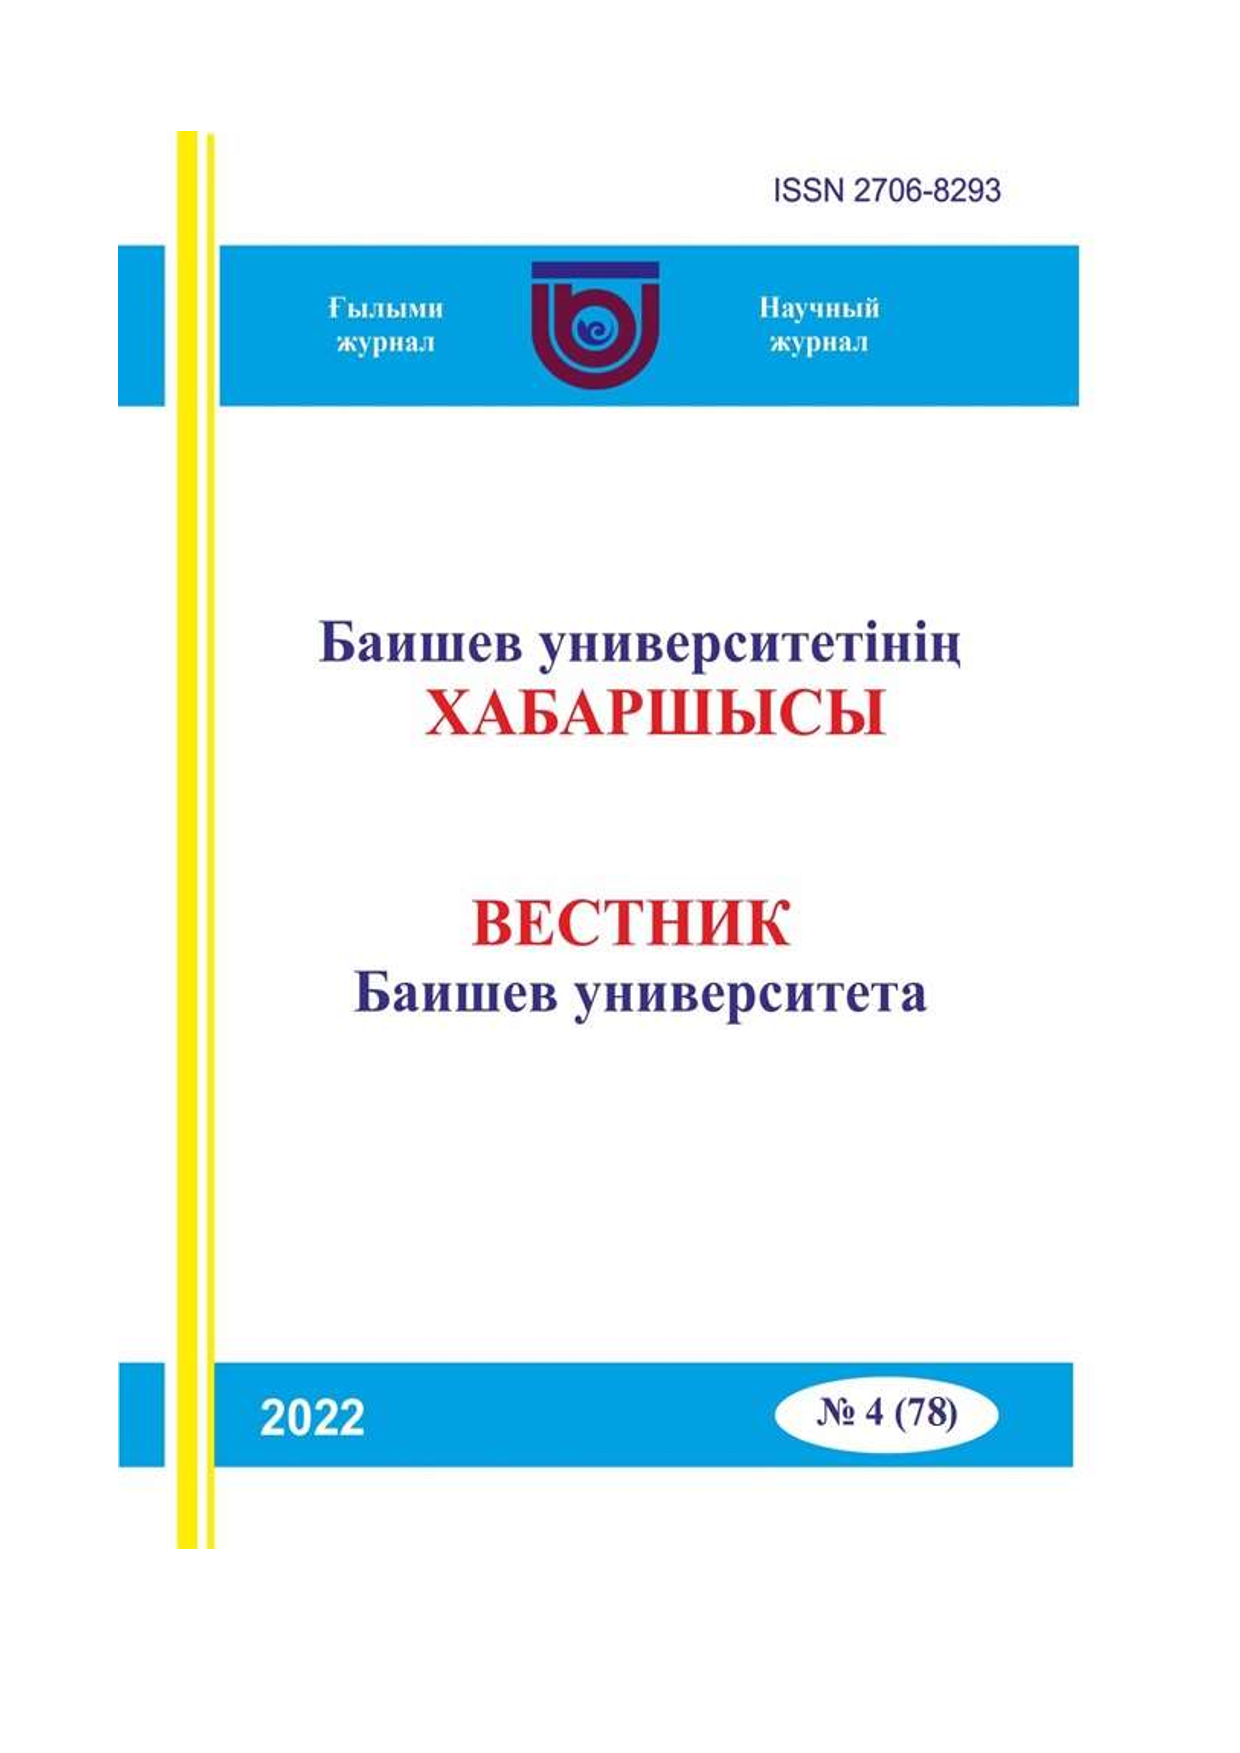 Вестник Баишев Университета №4(78) 2022г